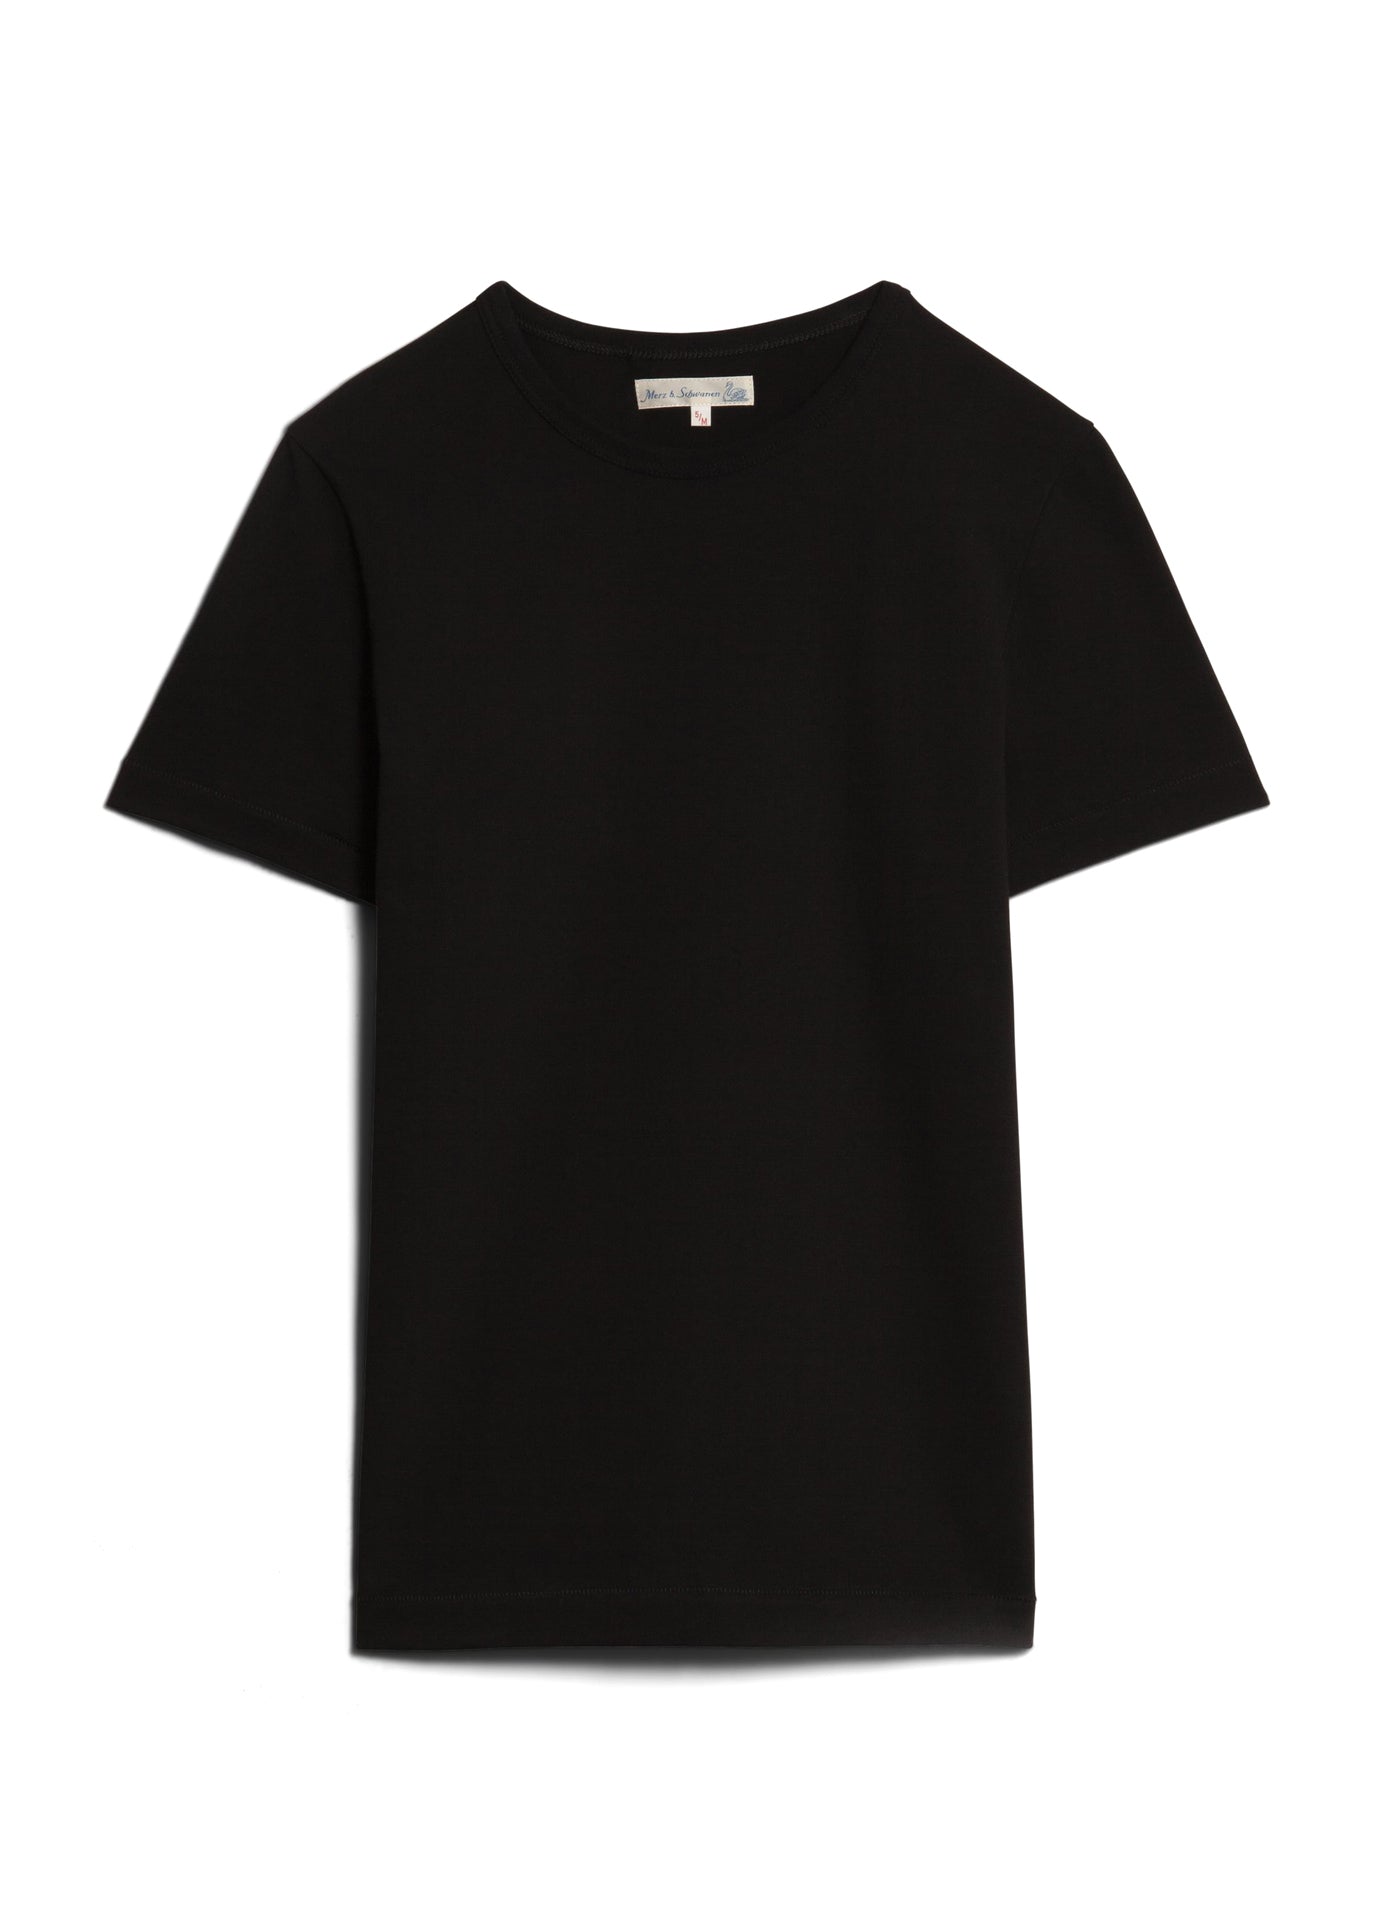 GOOD ORIGINALS | Loopwheeled T-Shirt 8,6oz | Deep Black